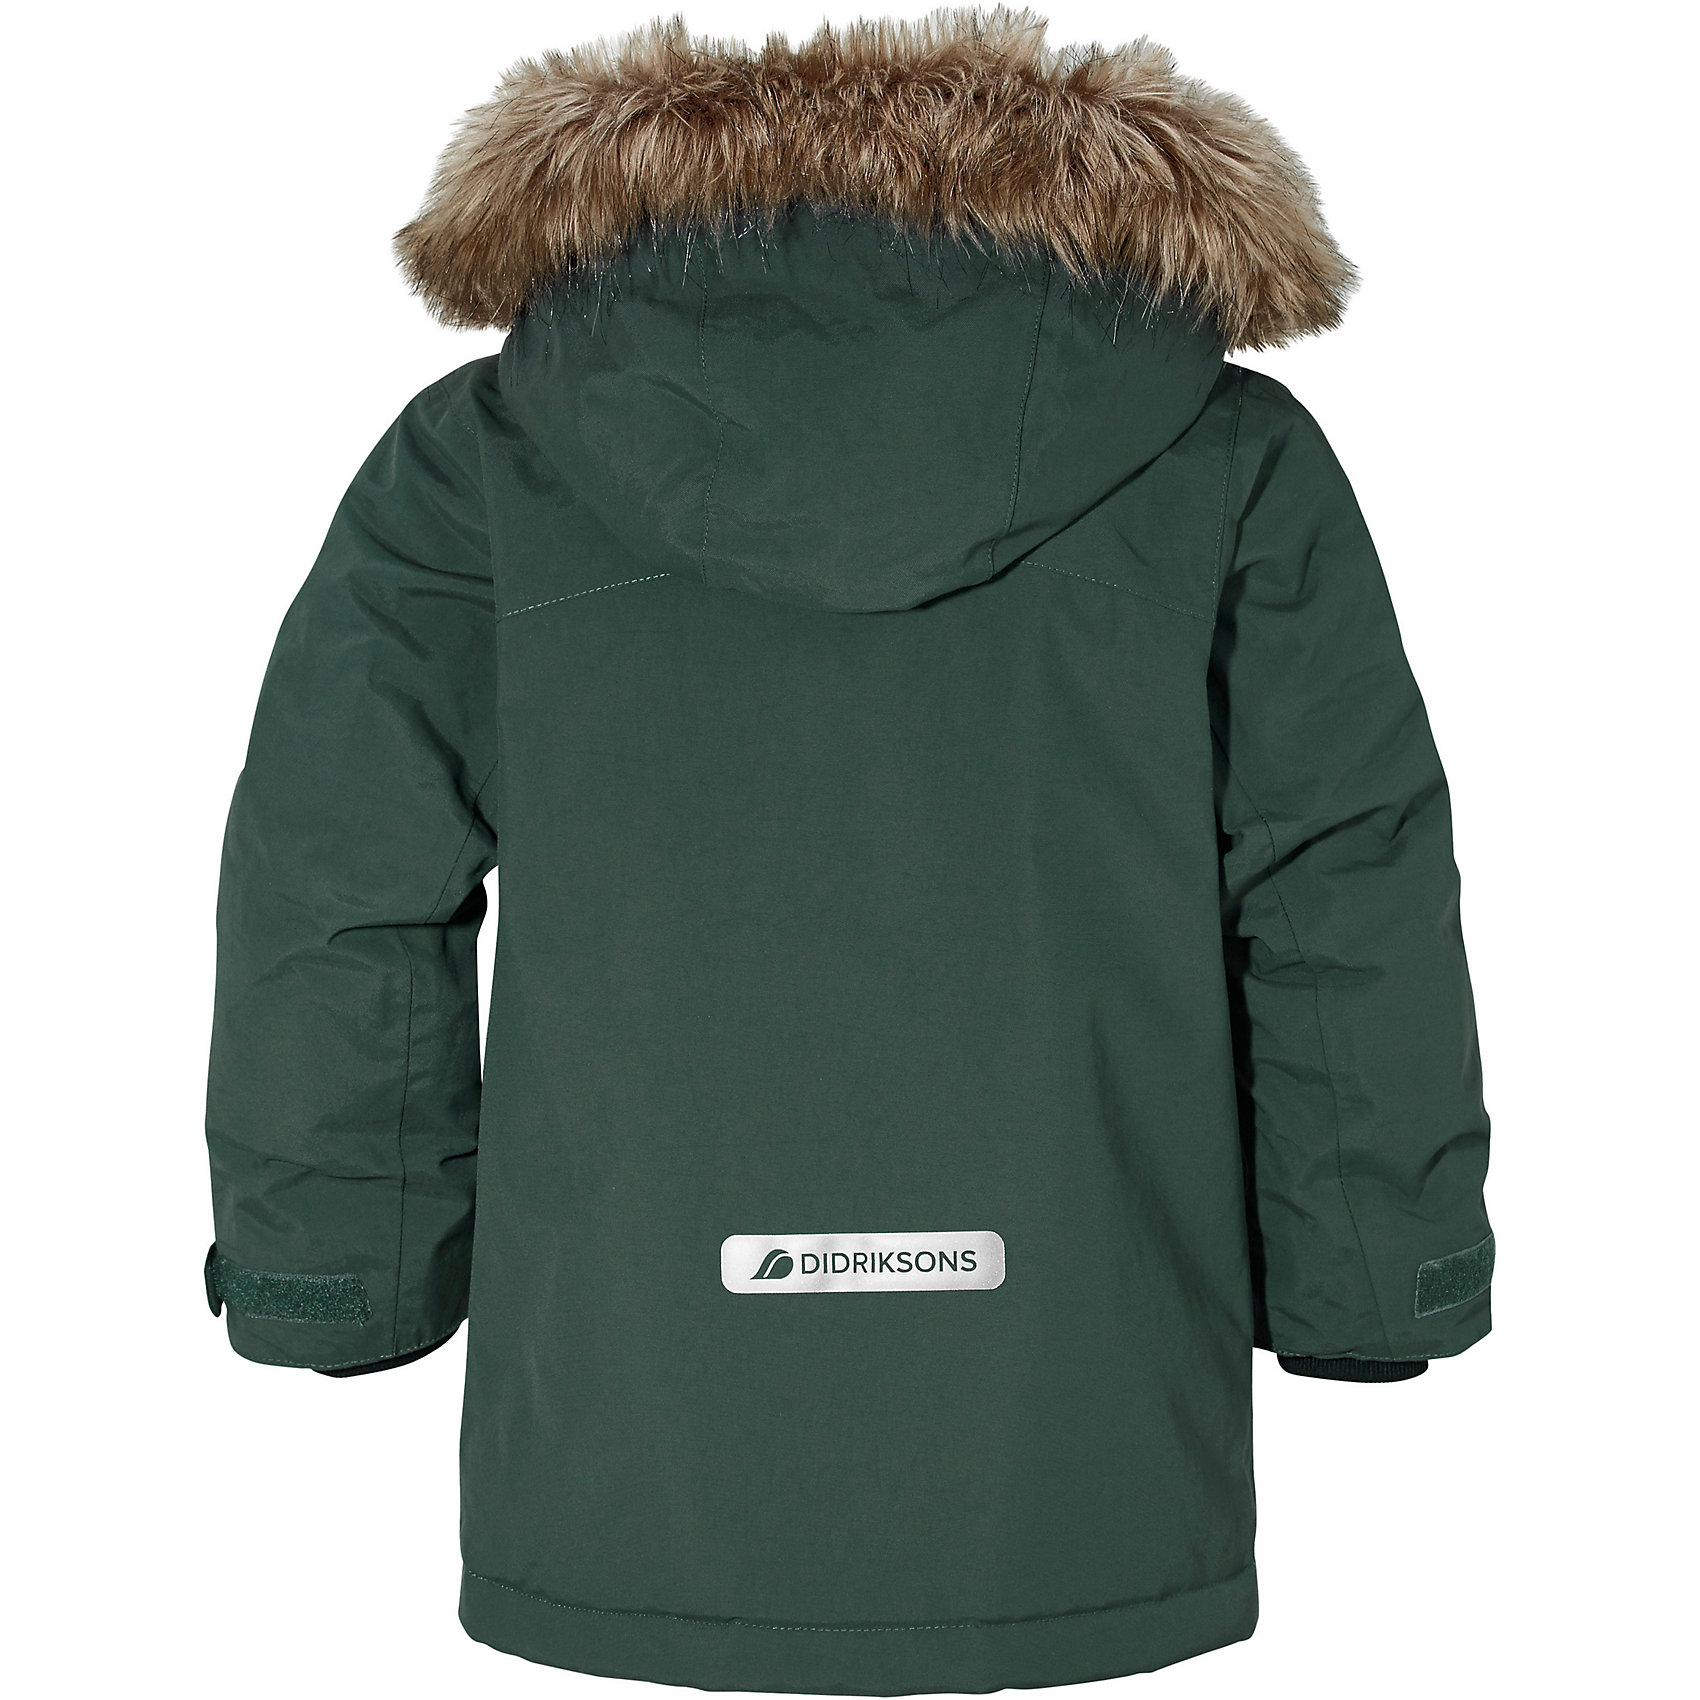 Утеплённая куртка s Kure DIDRIKSON 12464420